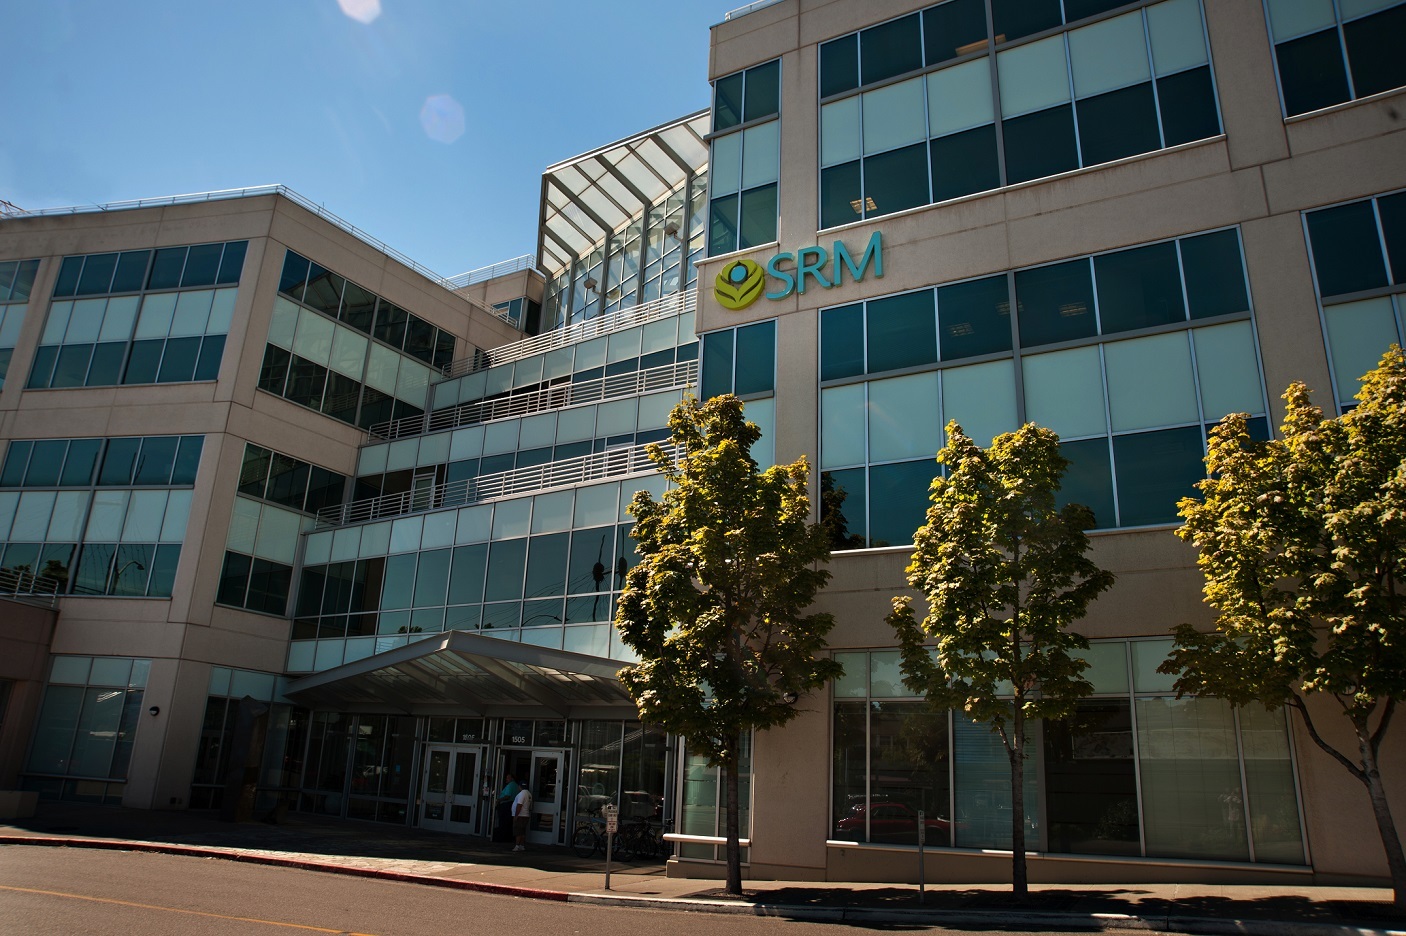 Photo of Seattle Reproductive Medicine building